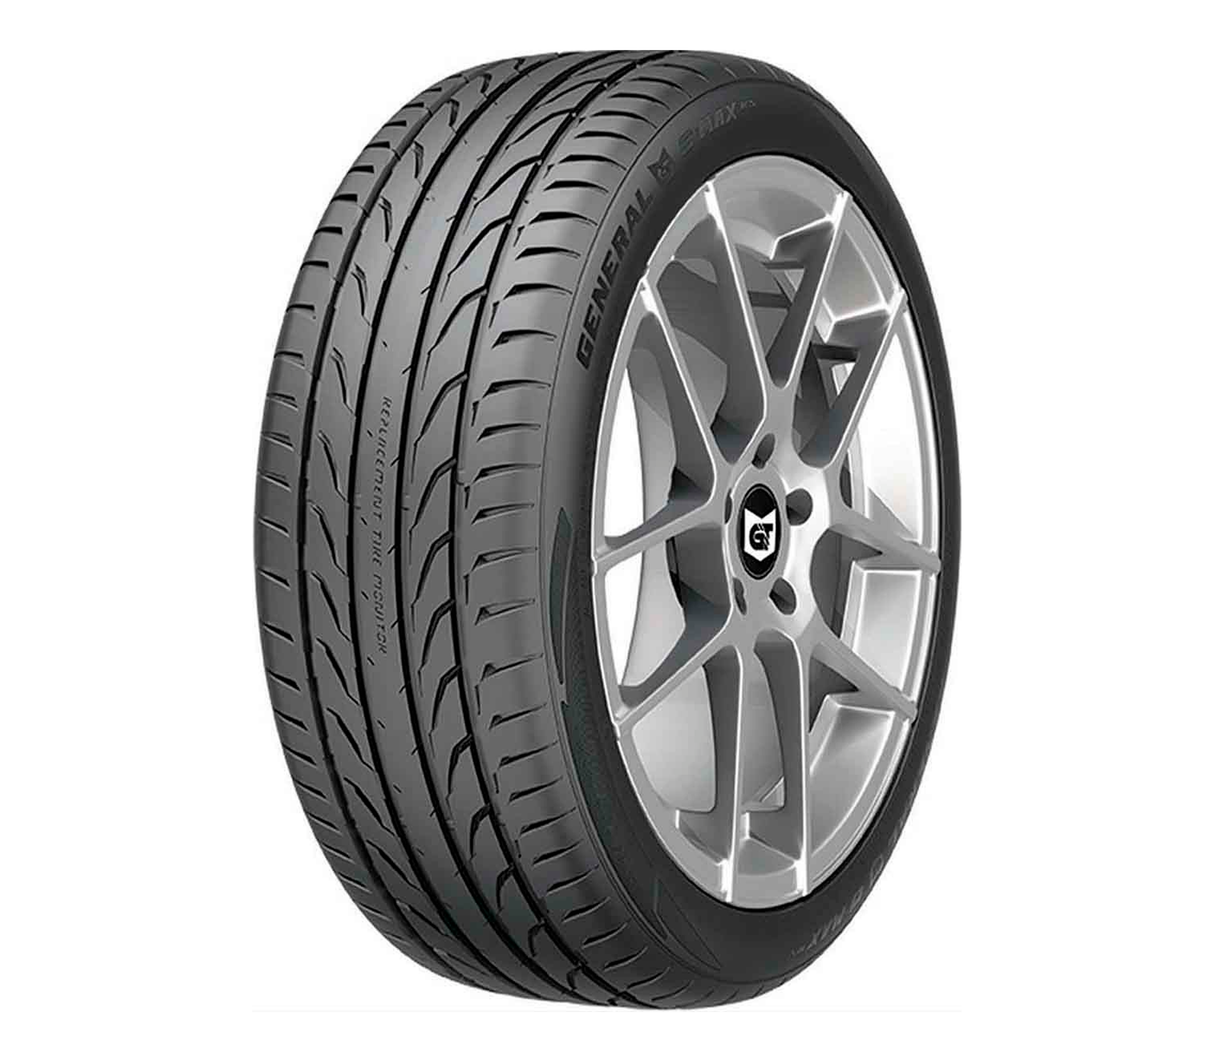 Neumático 185/60R14 82H Fr Gmax Rs General Tire